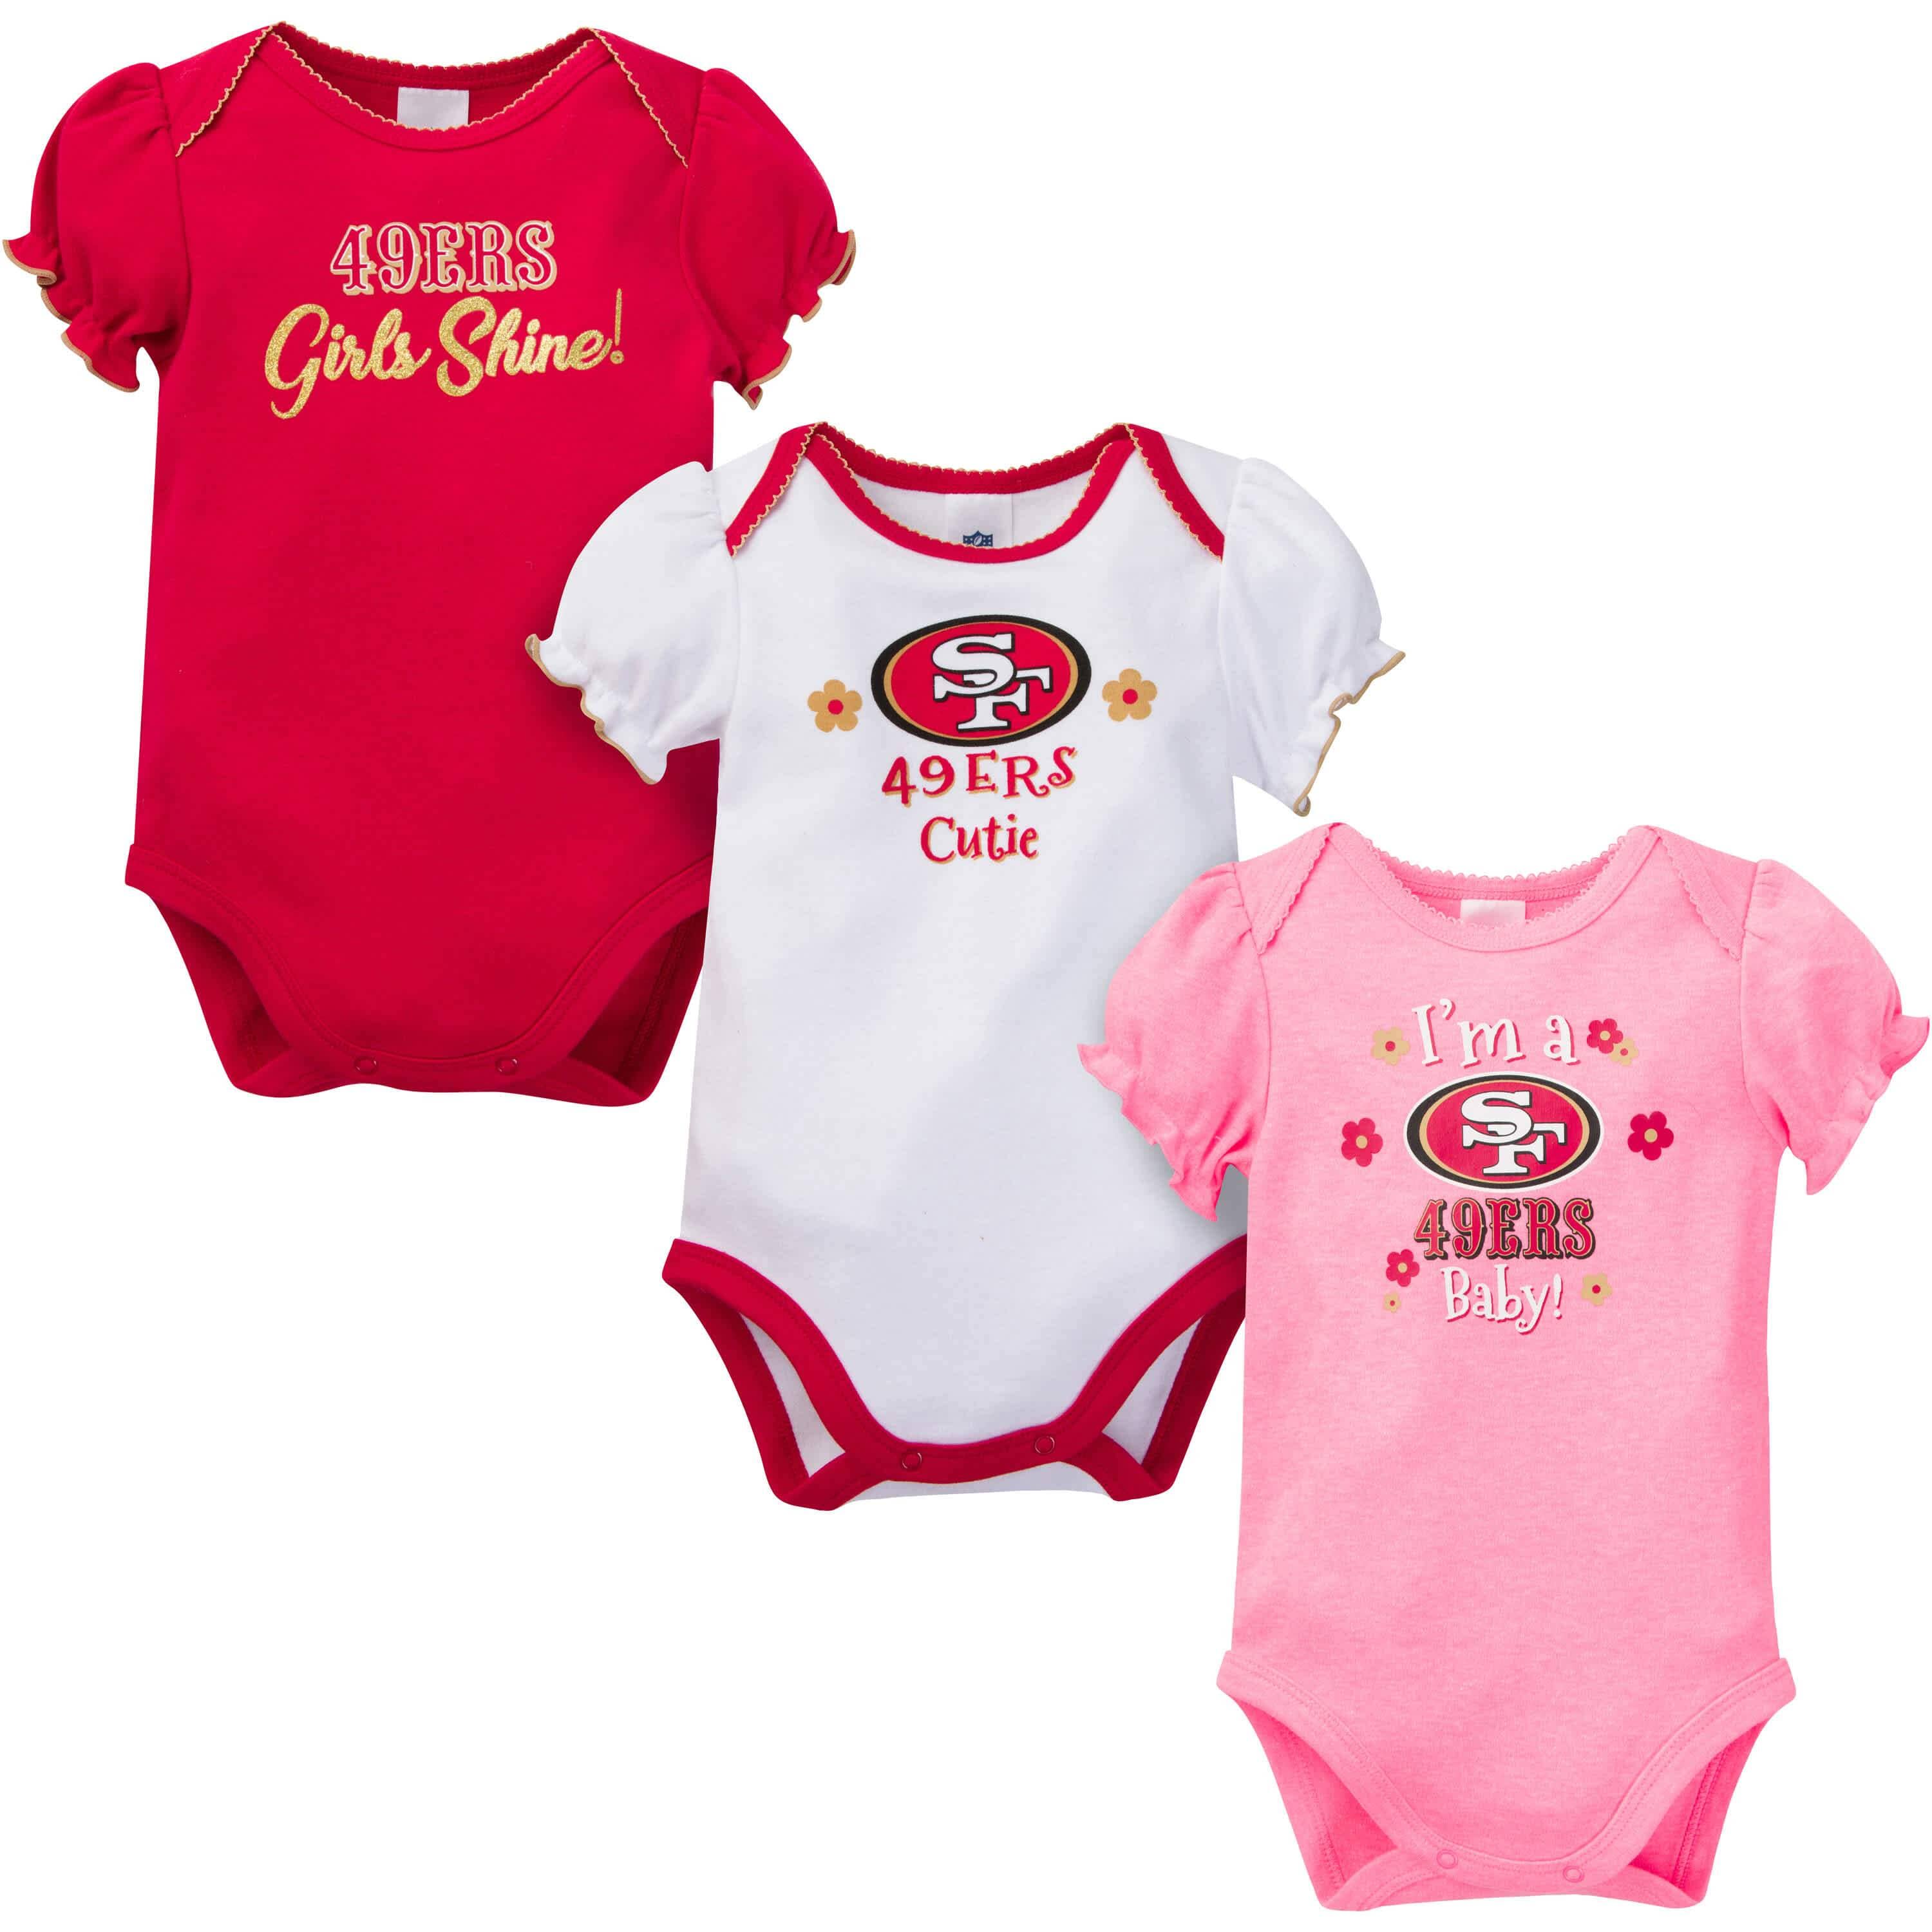 3-Pack Baby & Toddler Boys 49ers Short Sleeve Shirts – Gerber